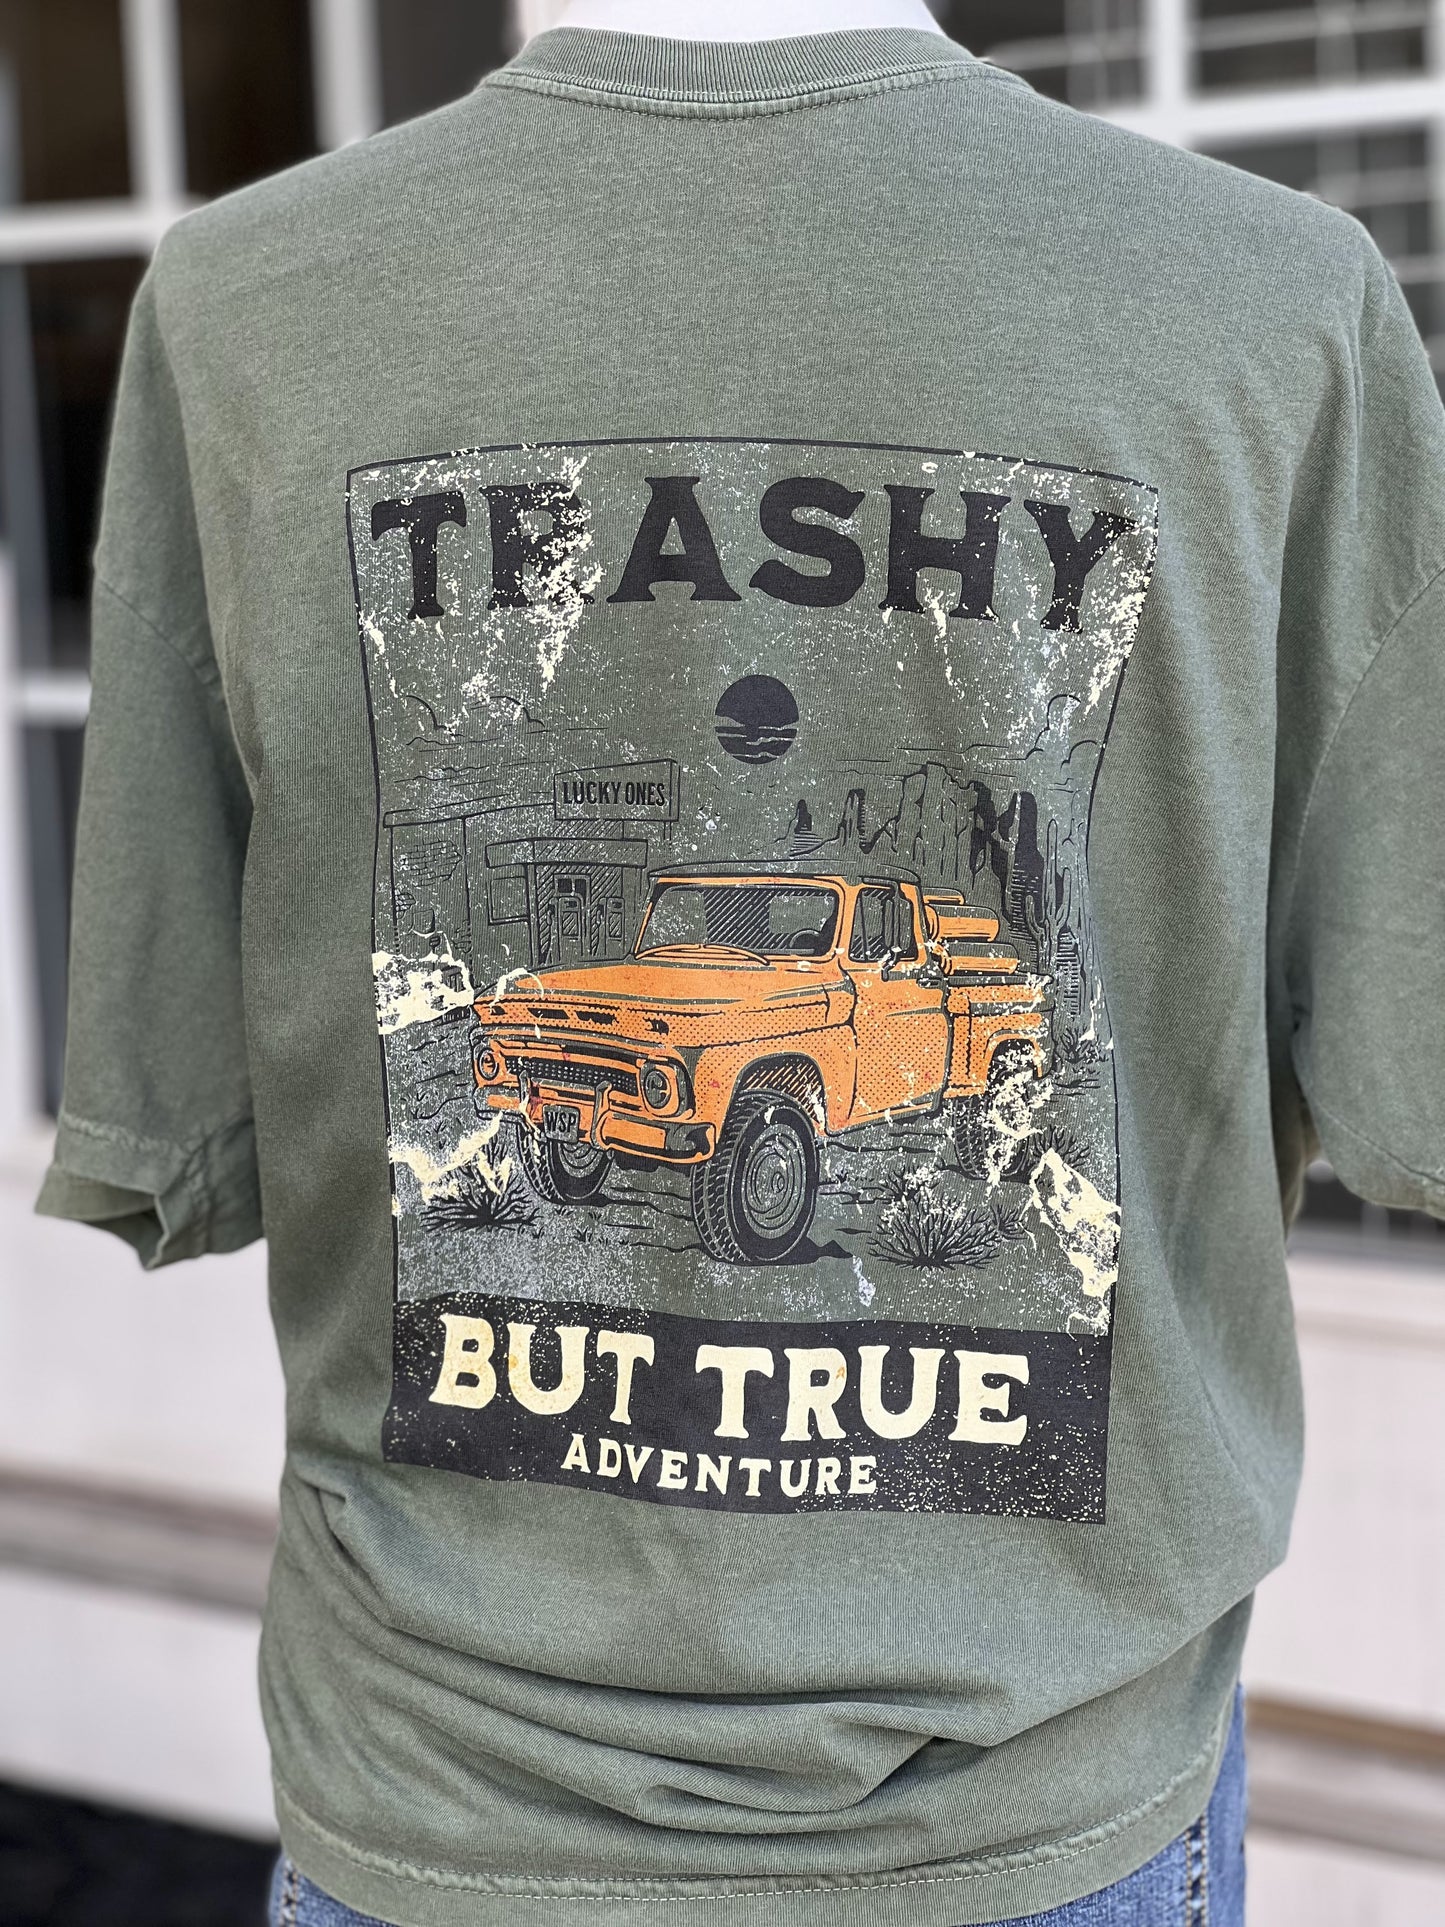 Widespread Panic "Trashy" T-Shirt